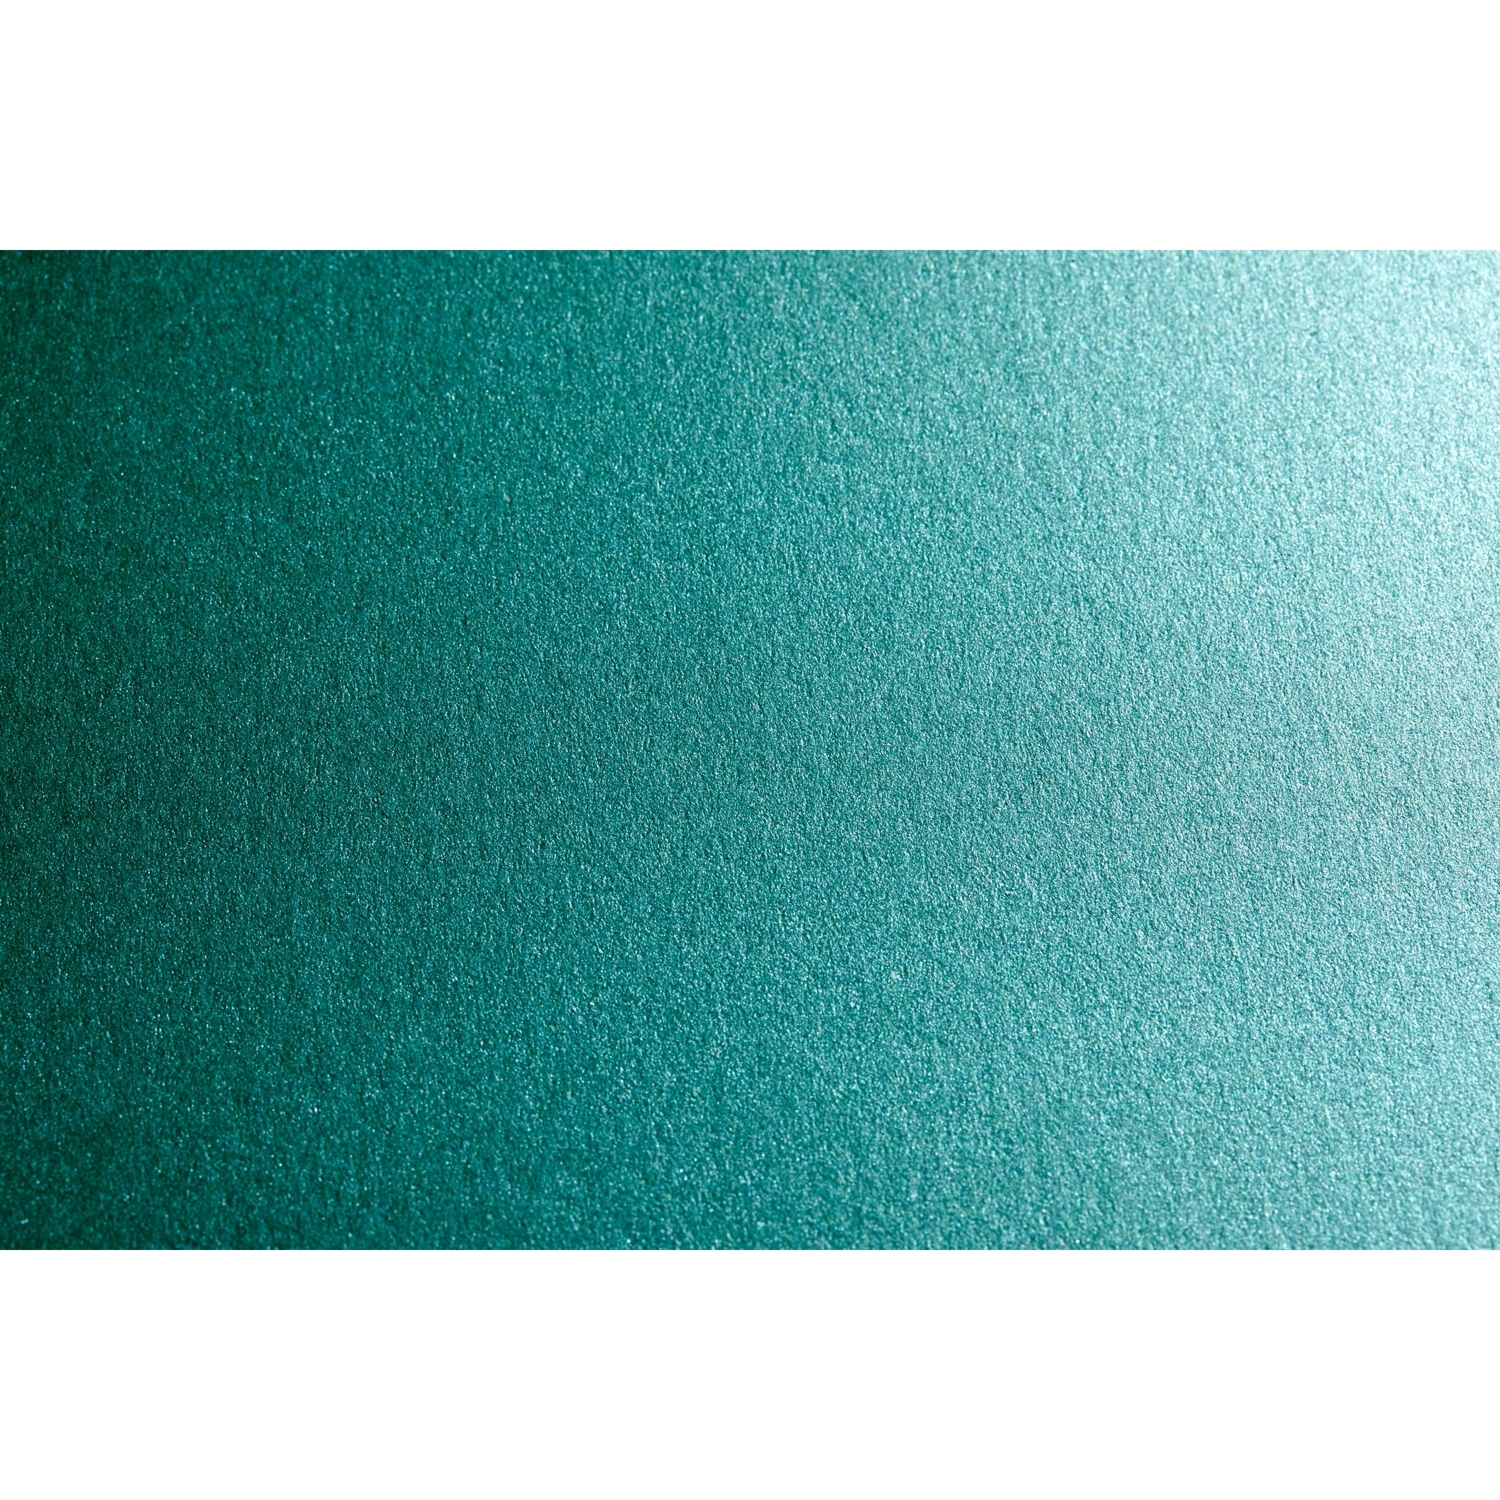 Centura Pearl Card - Green Image